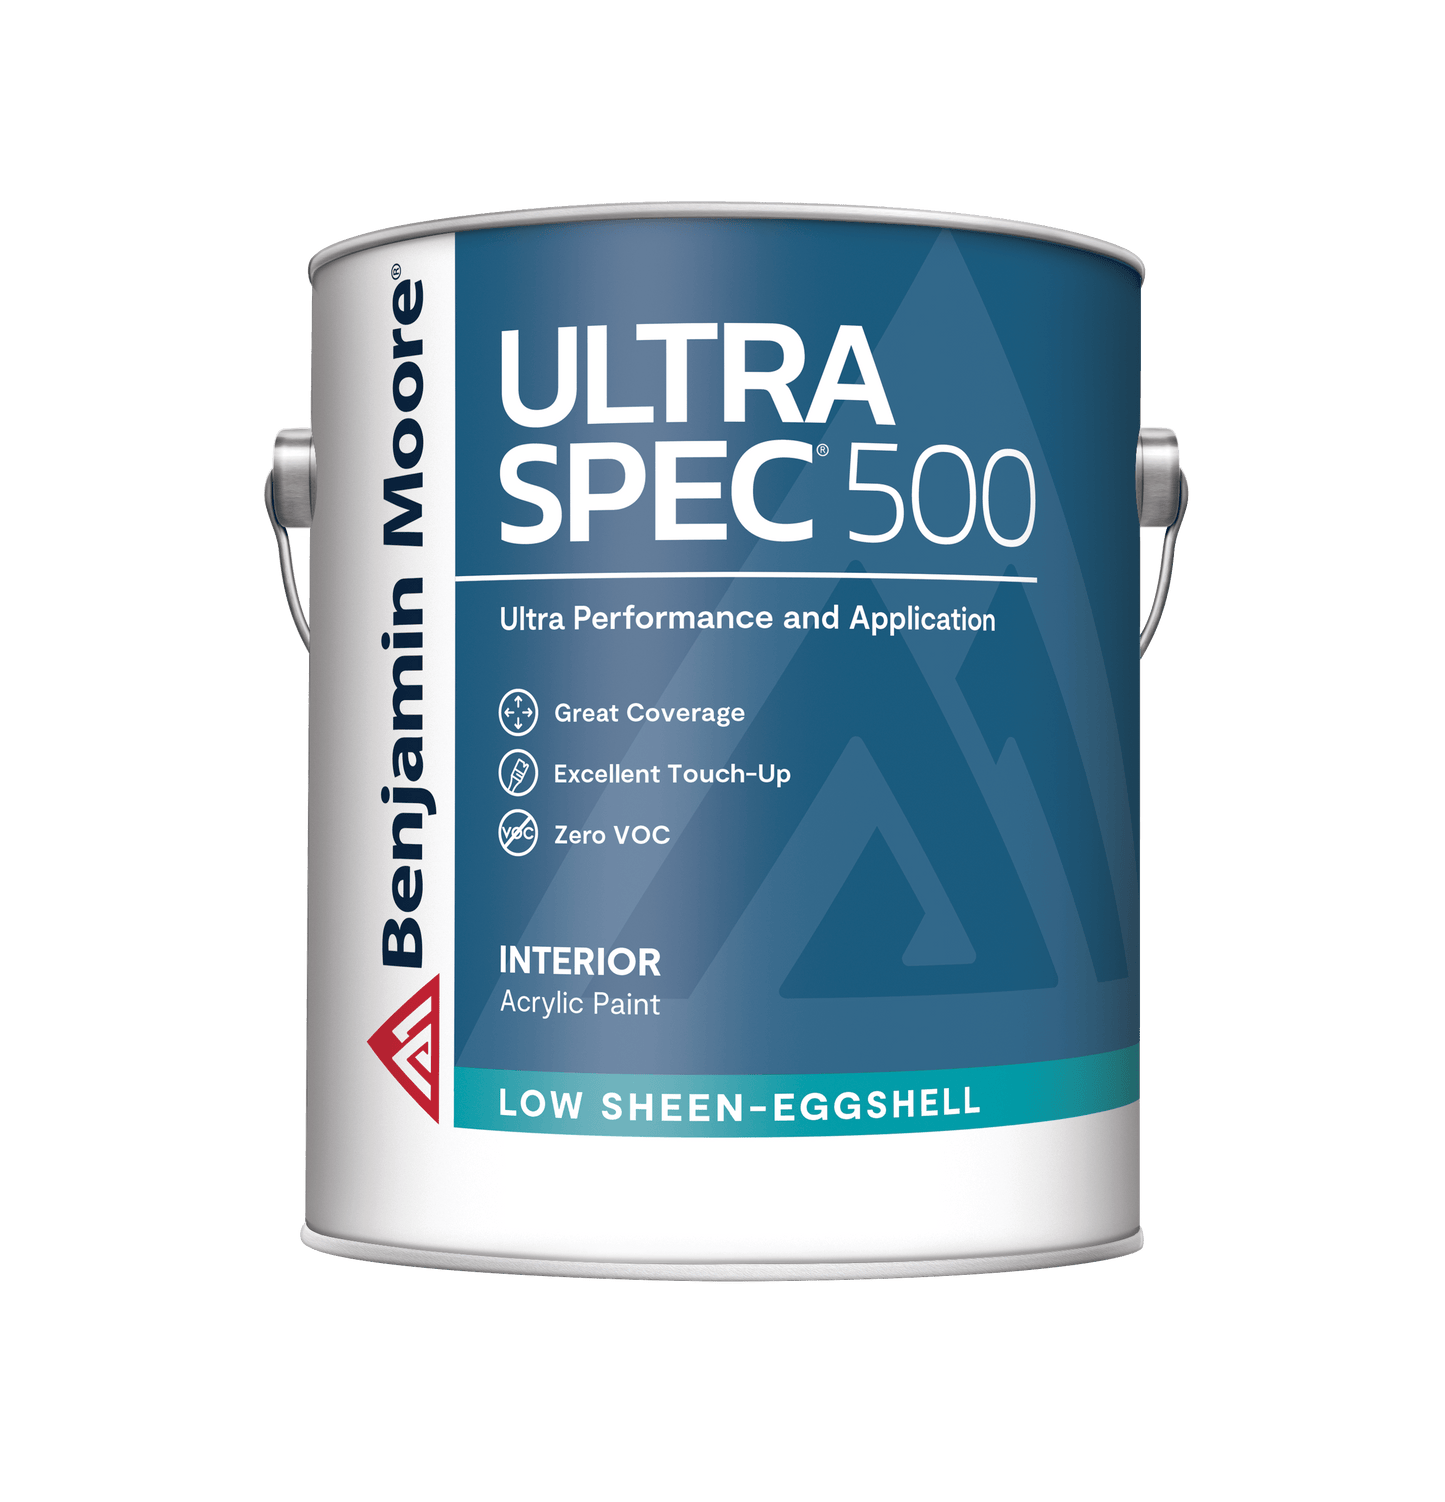 Benjamin Moore Ultra Spec 500 - Rossi Paint Stores - Low Sheen-Eggshell - Gallon